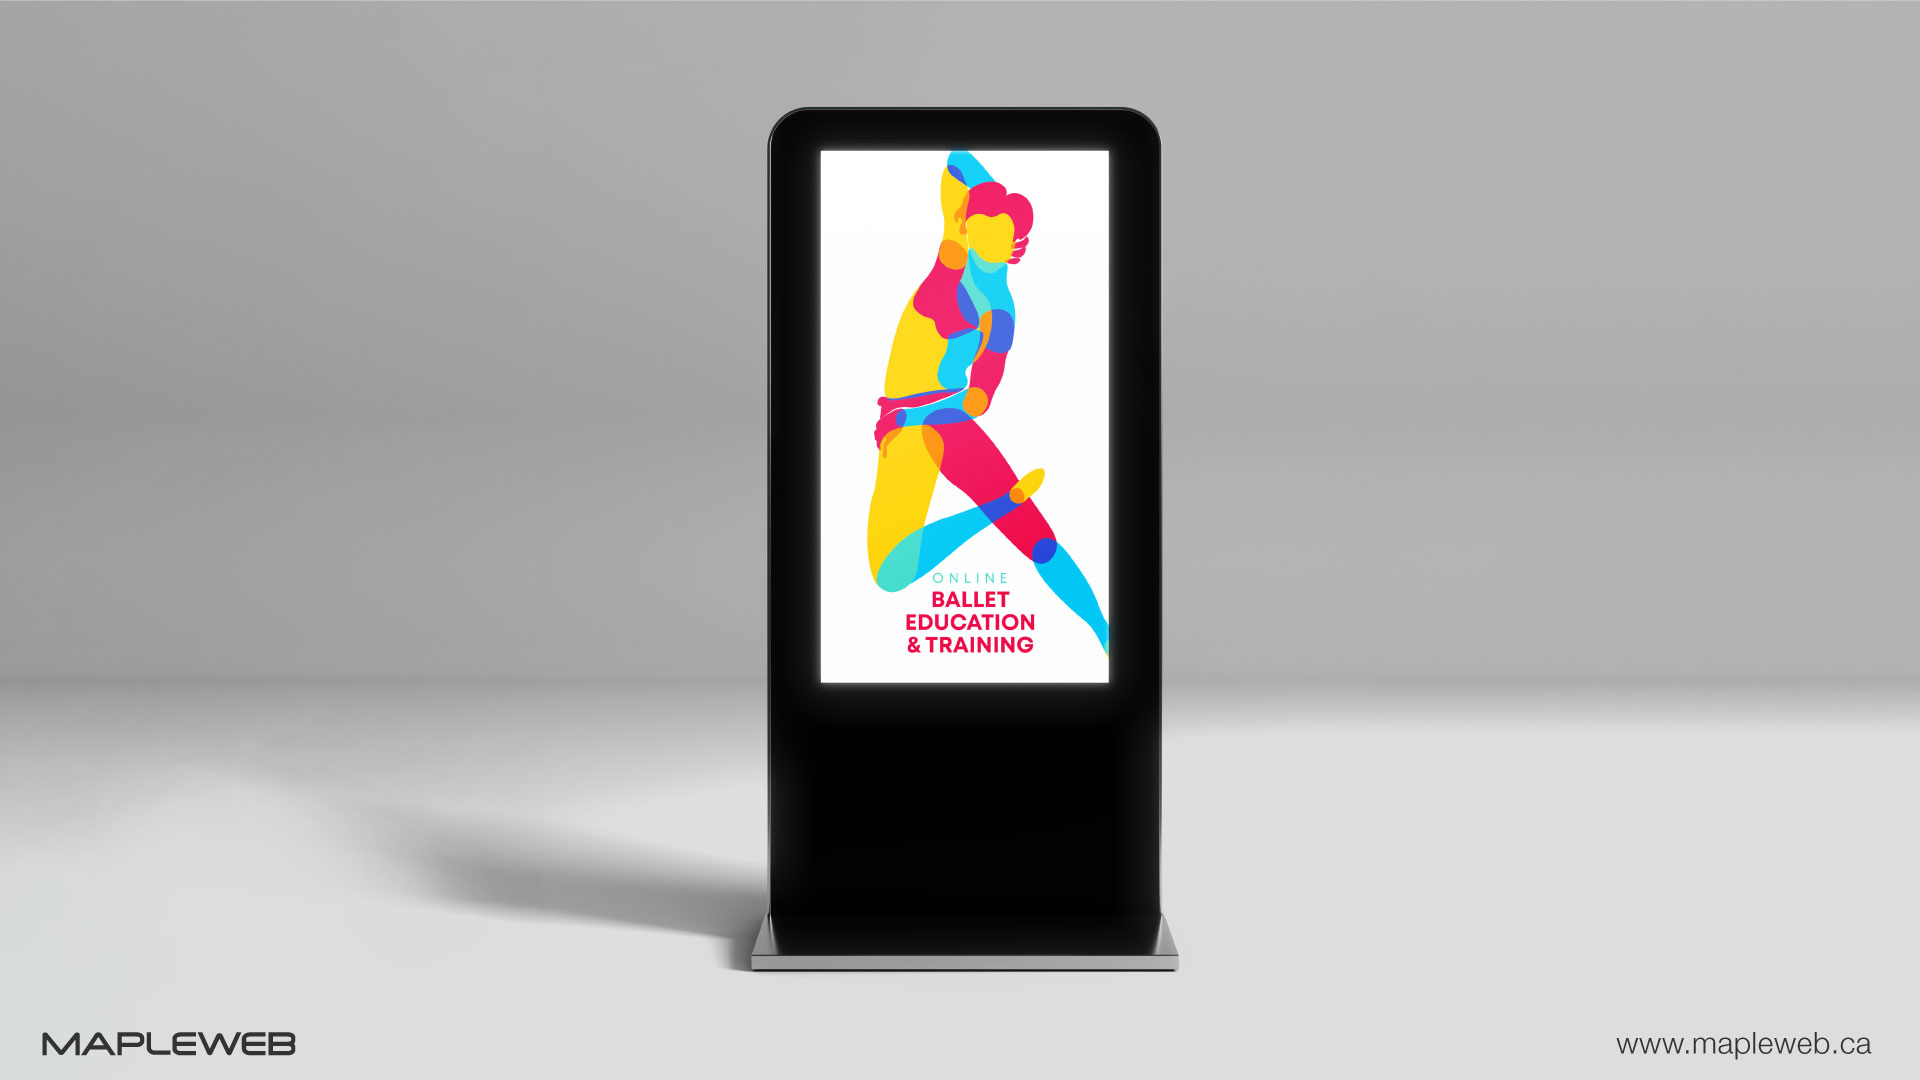 online-ballet-education-&-training-brand-logo-design-by-mapleweb-vancouver-canada-led-signage-mock